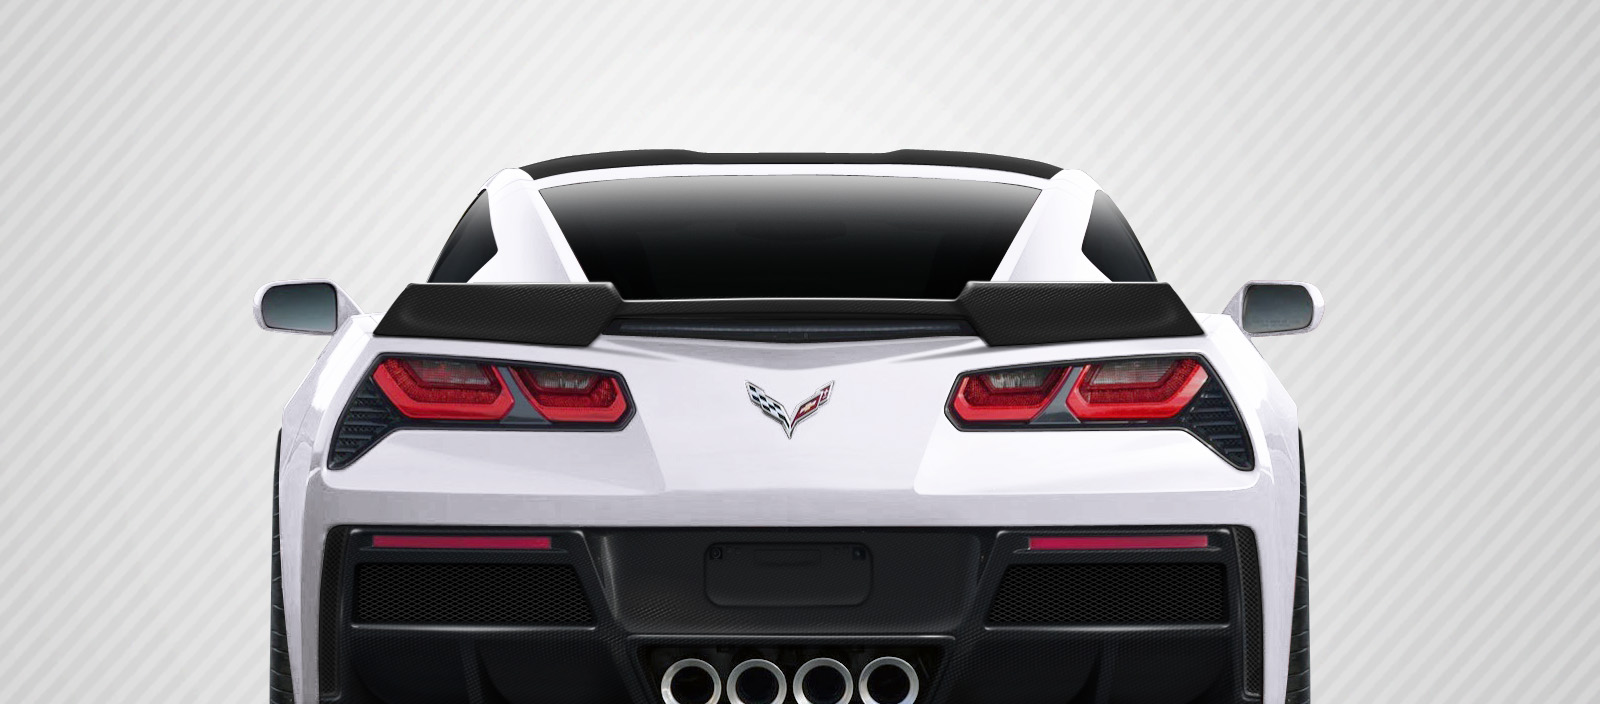 2014 Chevrolet Corvette ALL Wing Spoiler Bodykit - Chevrolet Corvette C7 Carbon Creations Gran Veloce Wing- 1 Piece